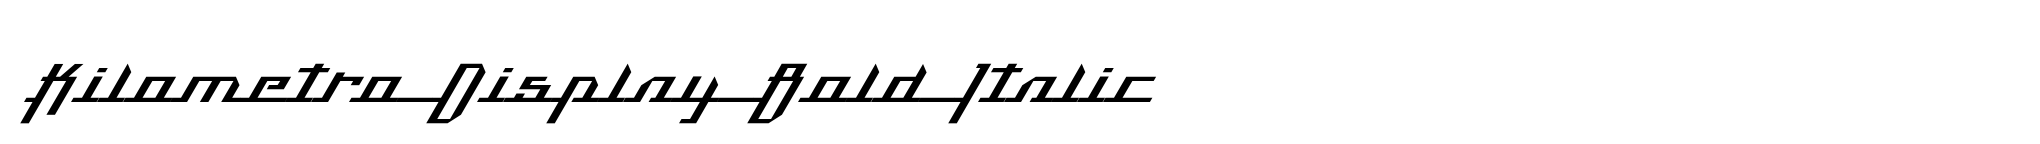 Kilometro Display Bold Italic image